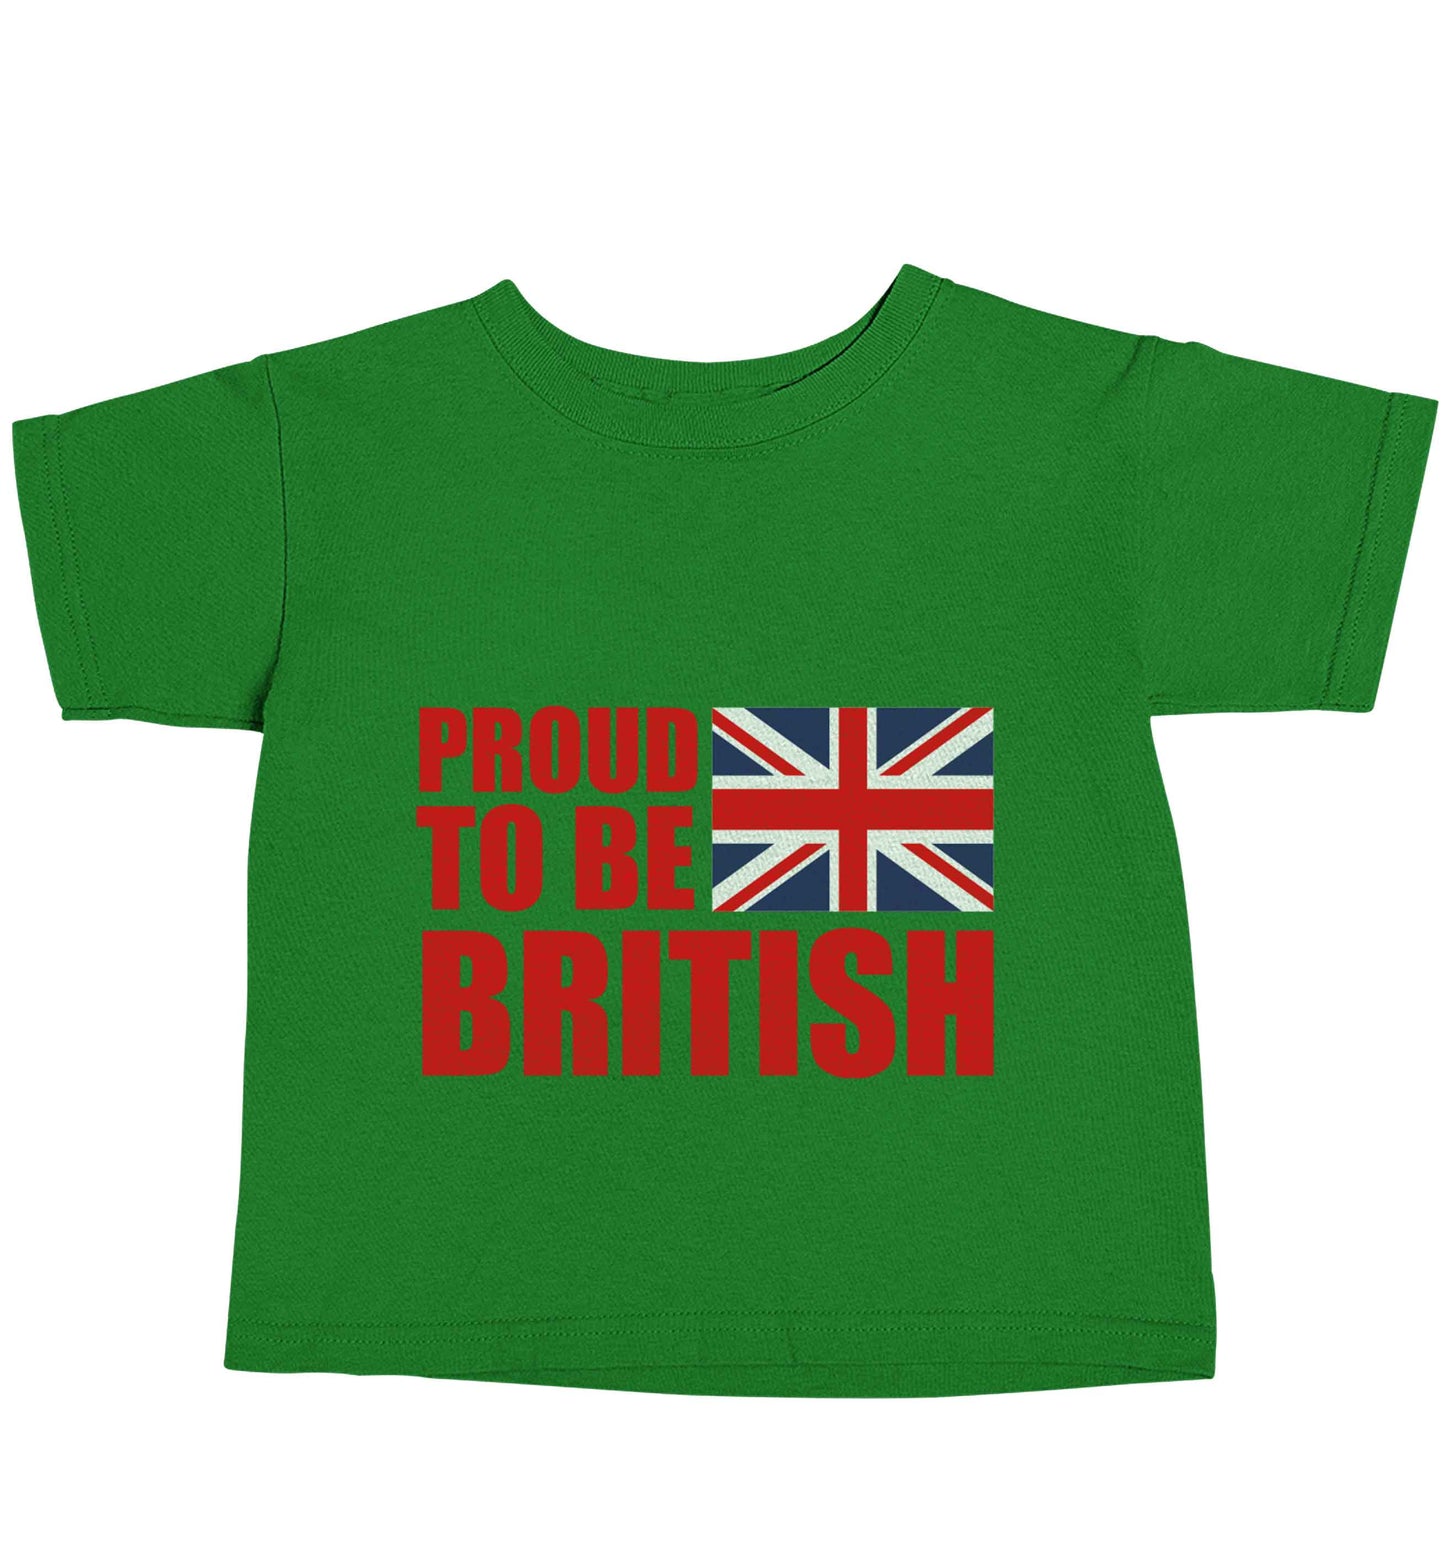 Proud to be British green baby toddler Tshirt 2 Years